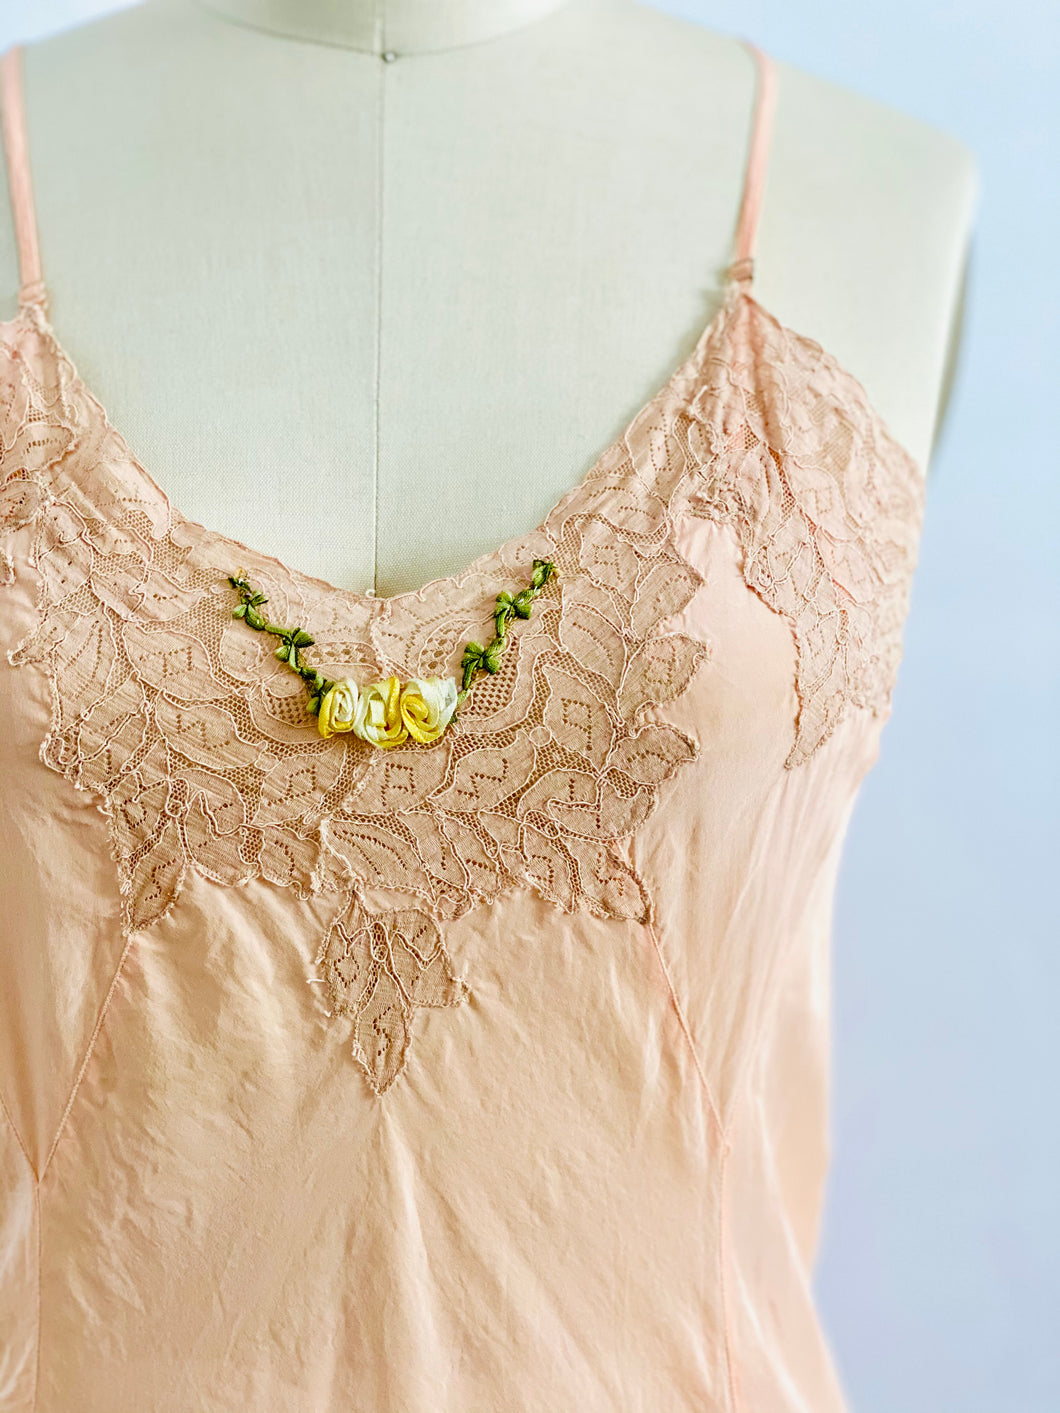 Vintage 1930s peach lingerie slip with ribbonwork flowers